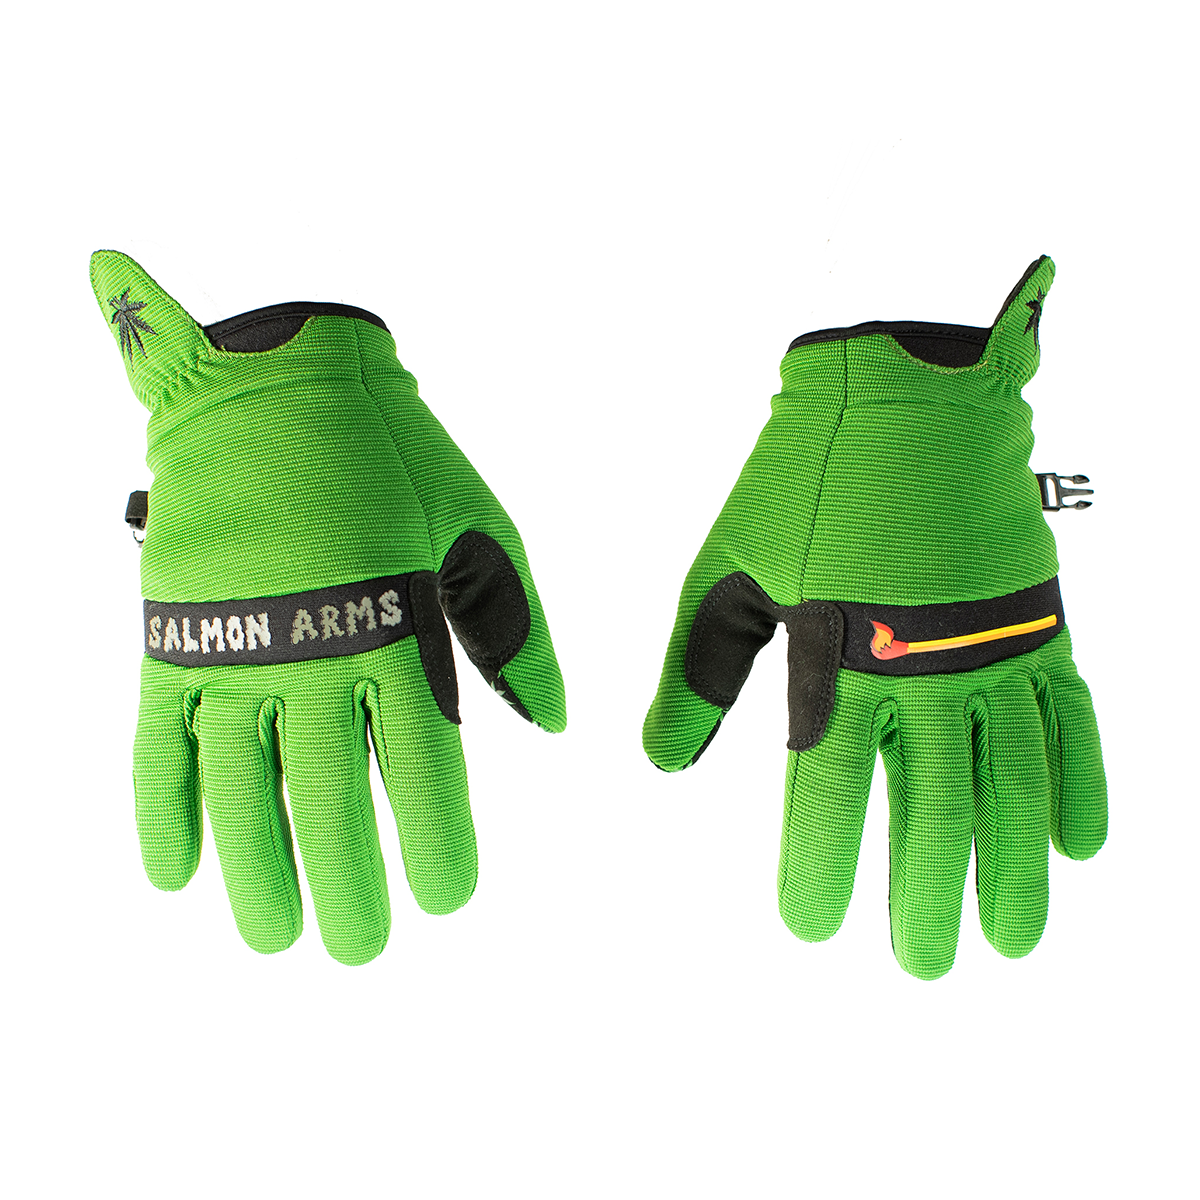 Salmon Arms Spring Glove - Green Leaf